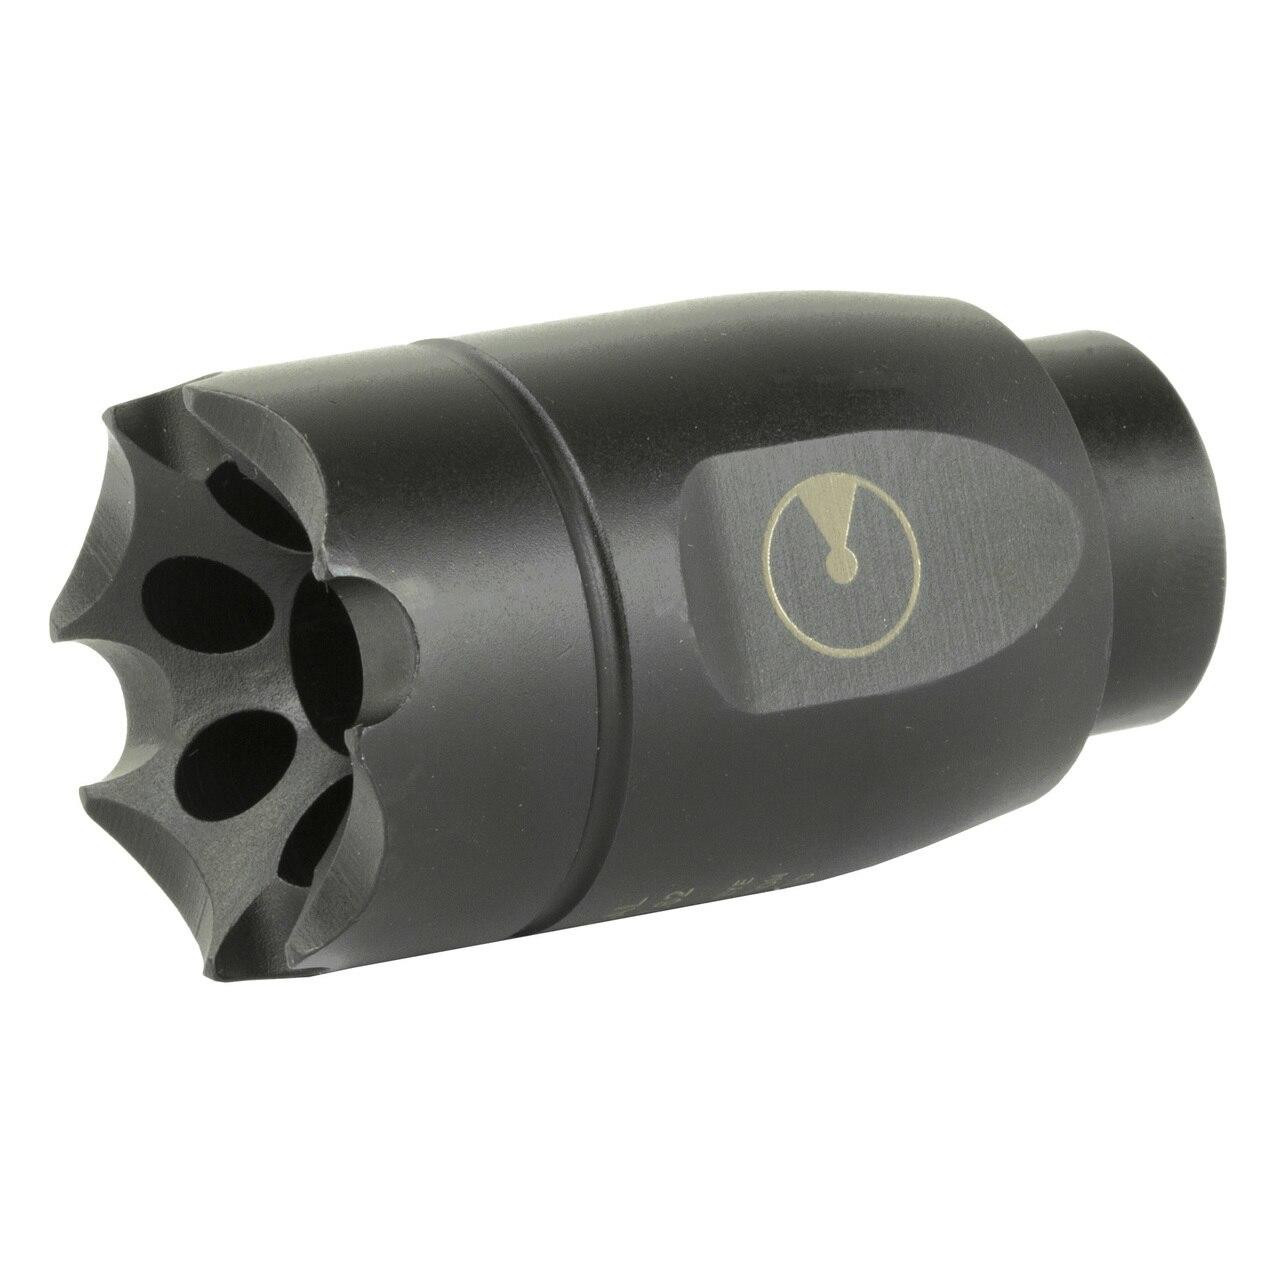 Ultradyne USA Ultradyne AR ATHENA Muzzle Break .308/7.62 Caliber 5/8x24 Threads Steel Nitride 851019008293